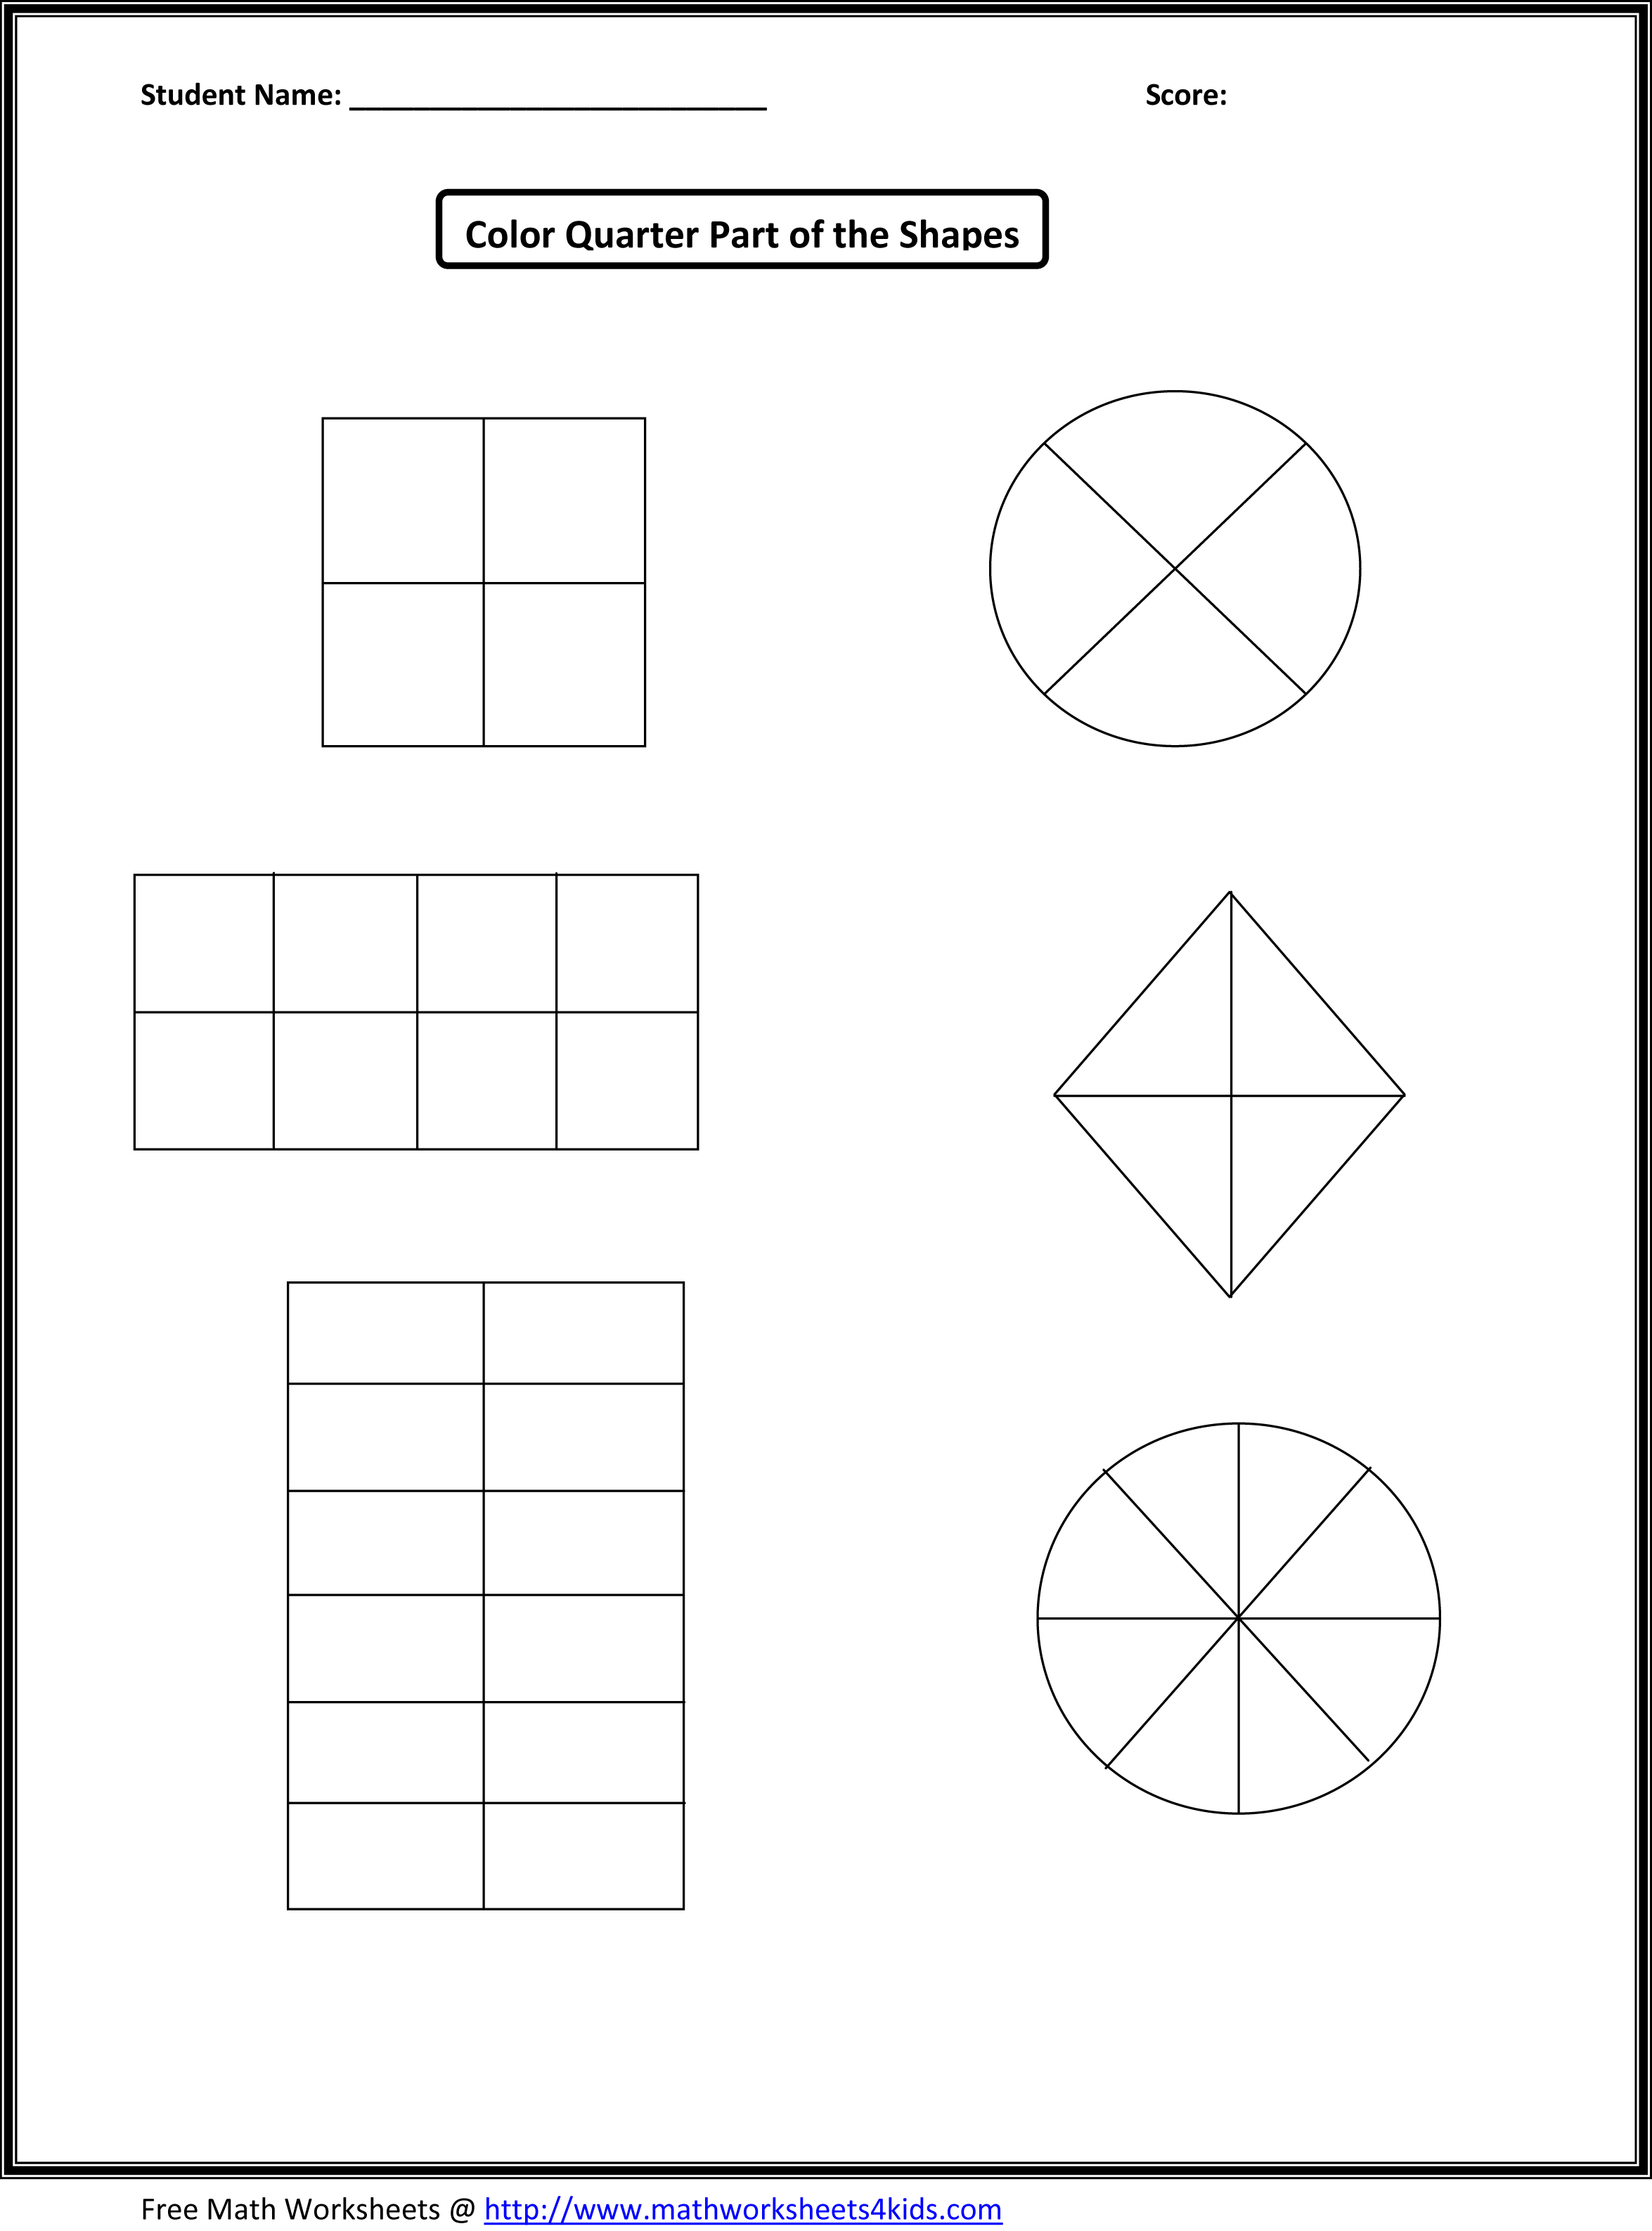 First grade shapes math worksheets printable halves of